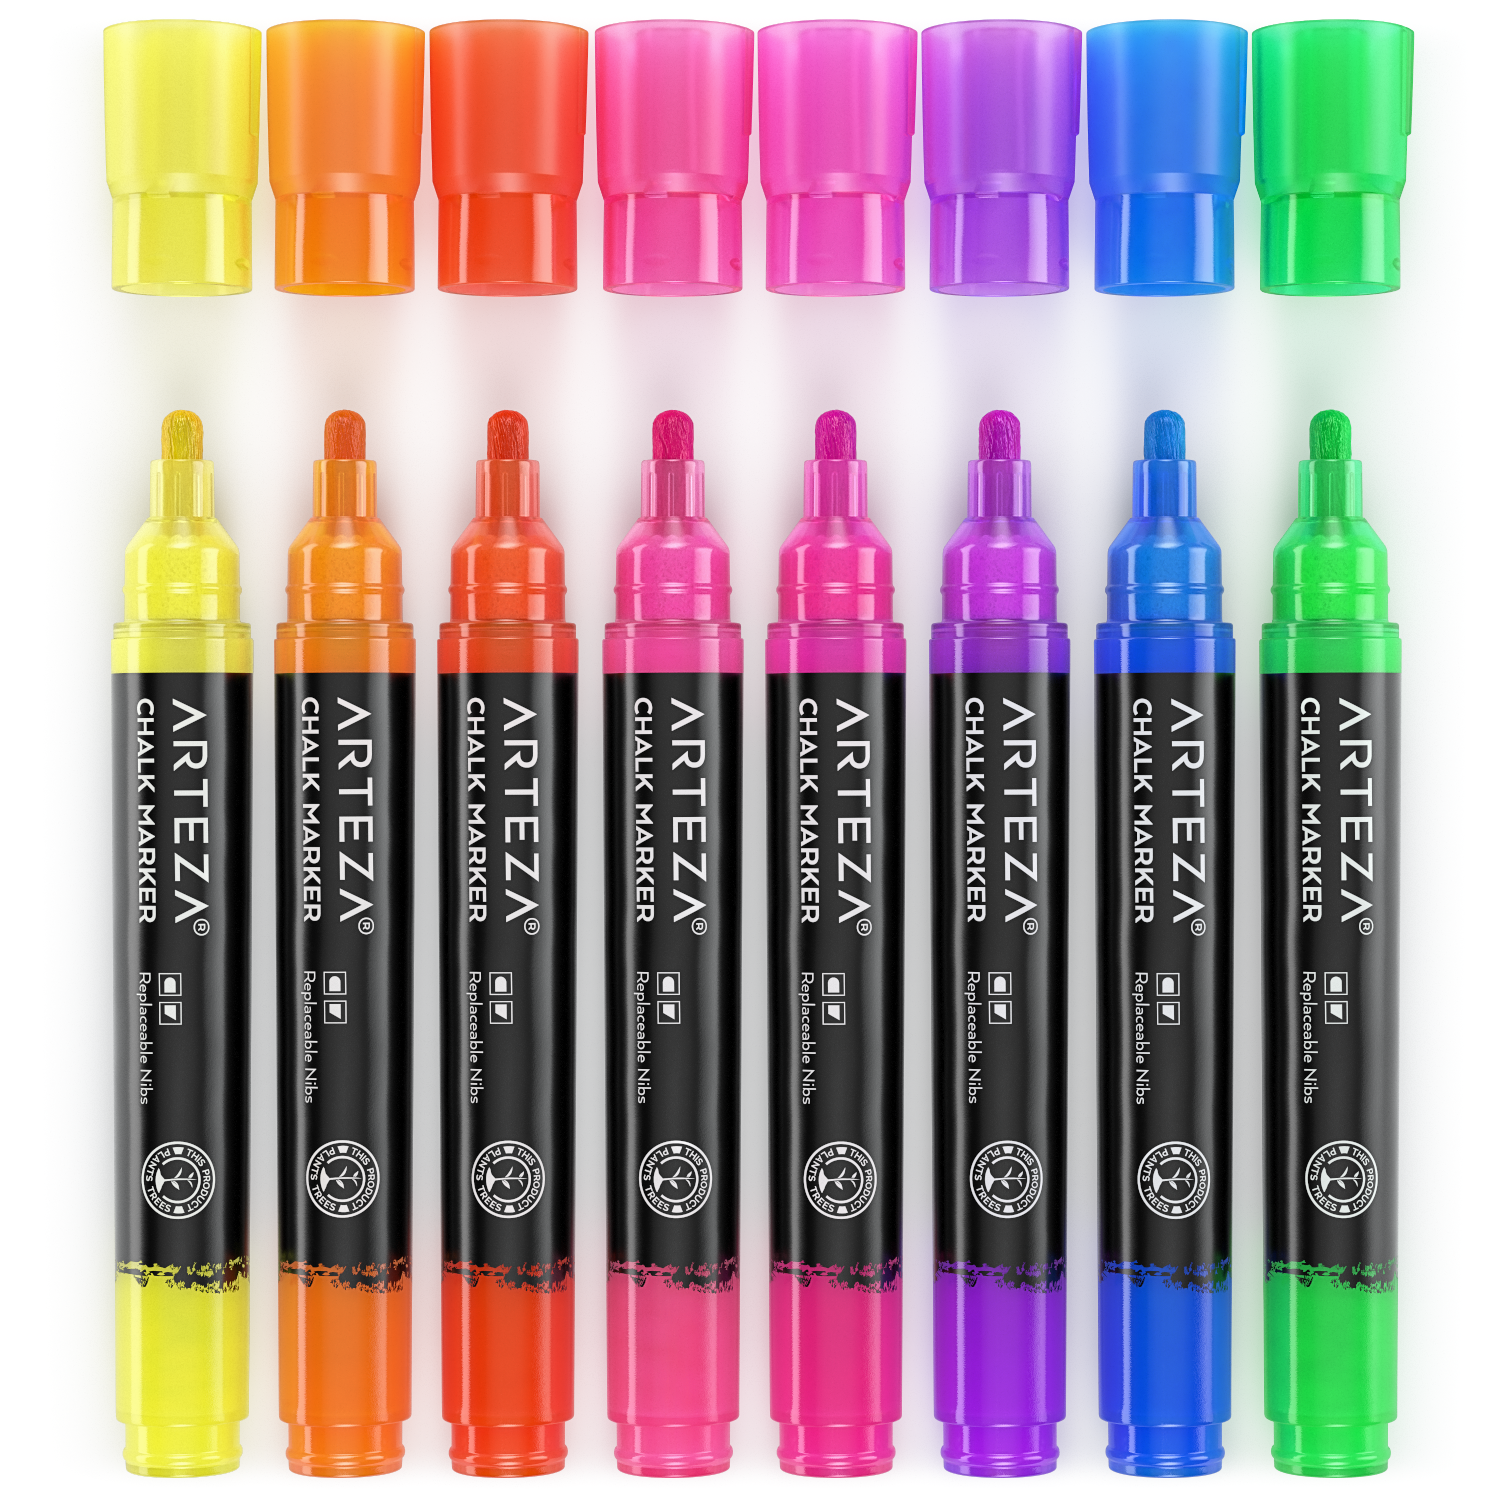 10 neon colors liquid chalk markers